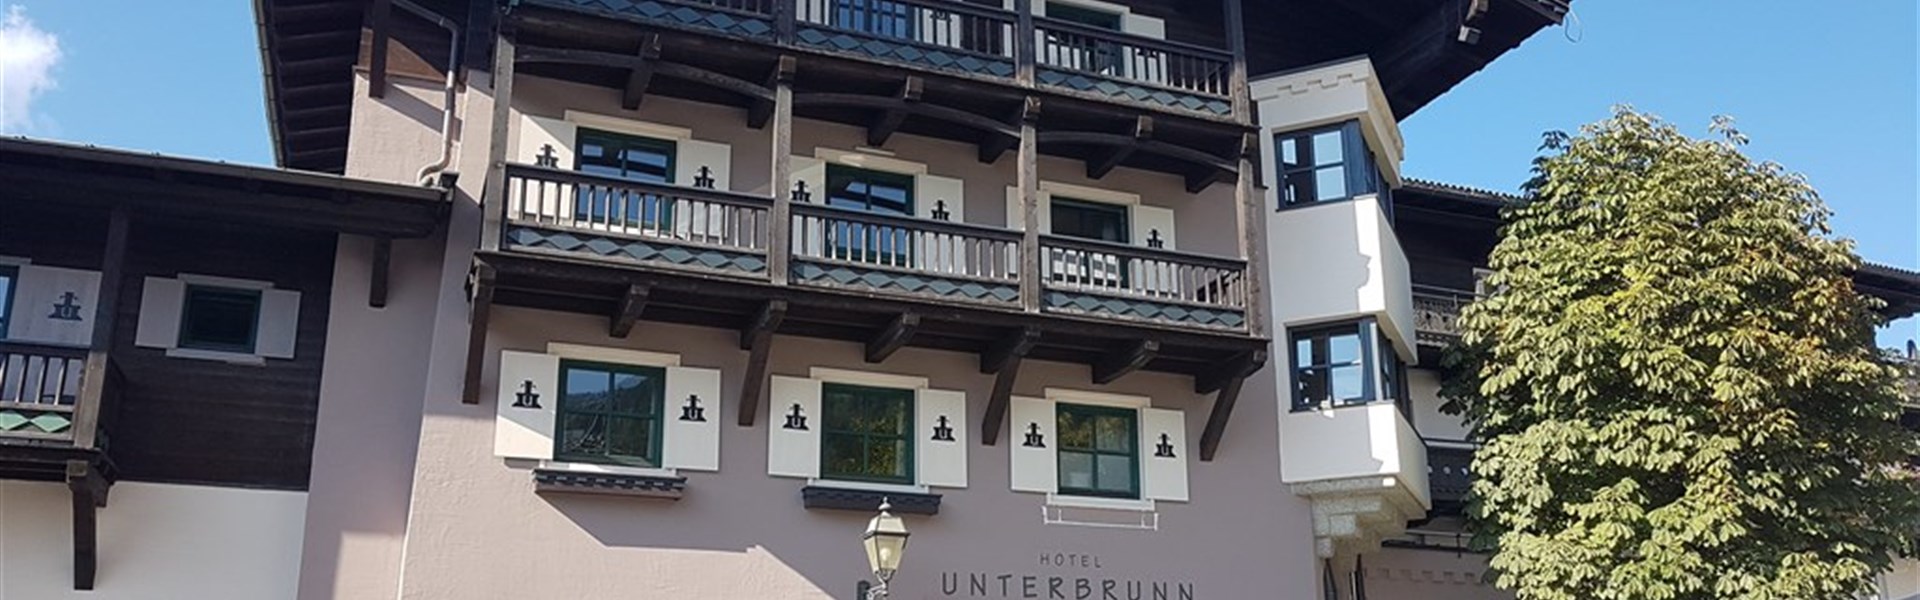 Marco Polo - Wohlfühlhotel Unterbrunn (S) - 